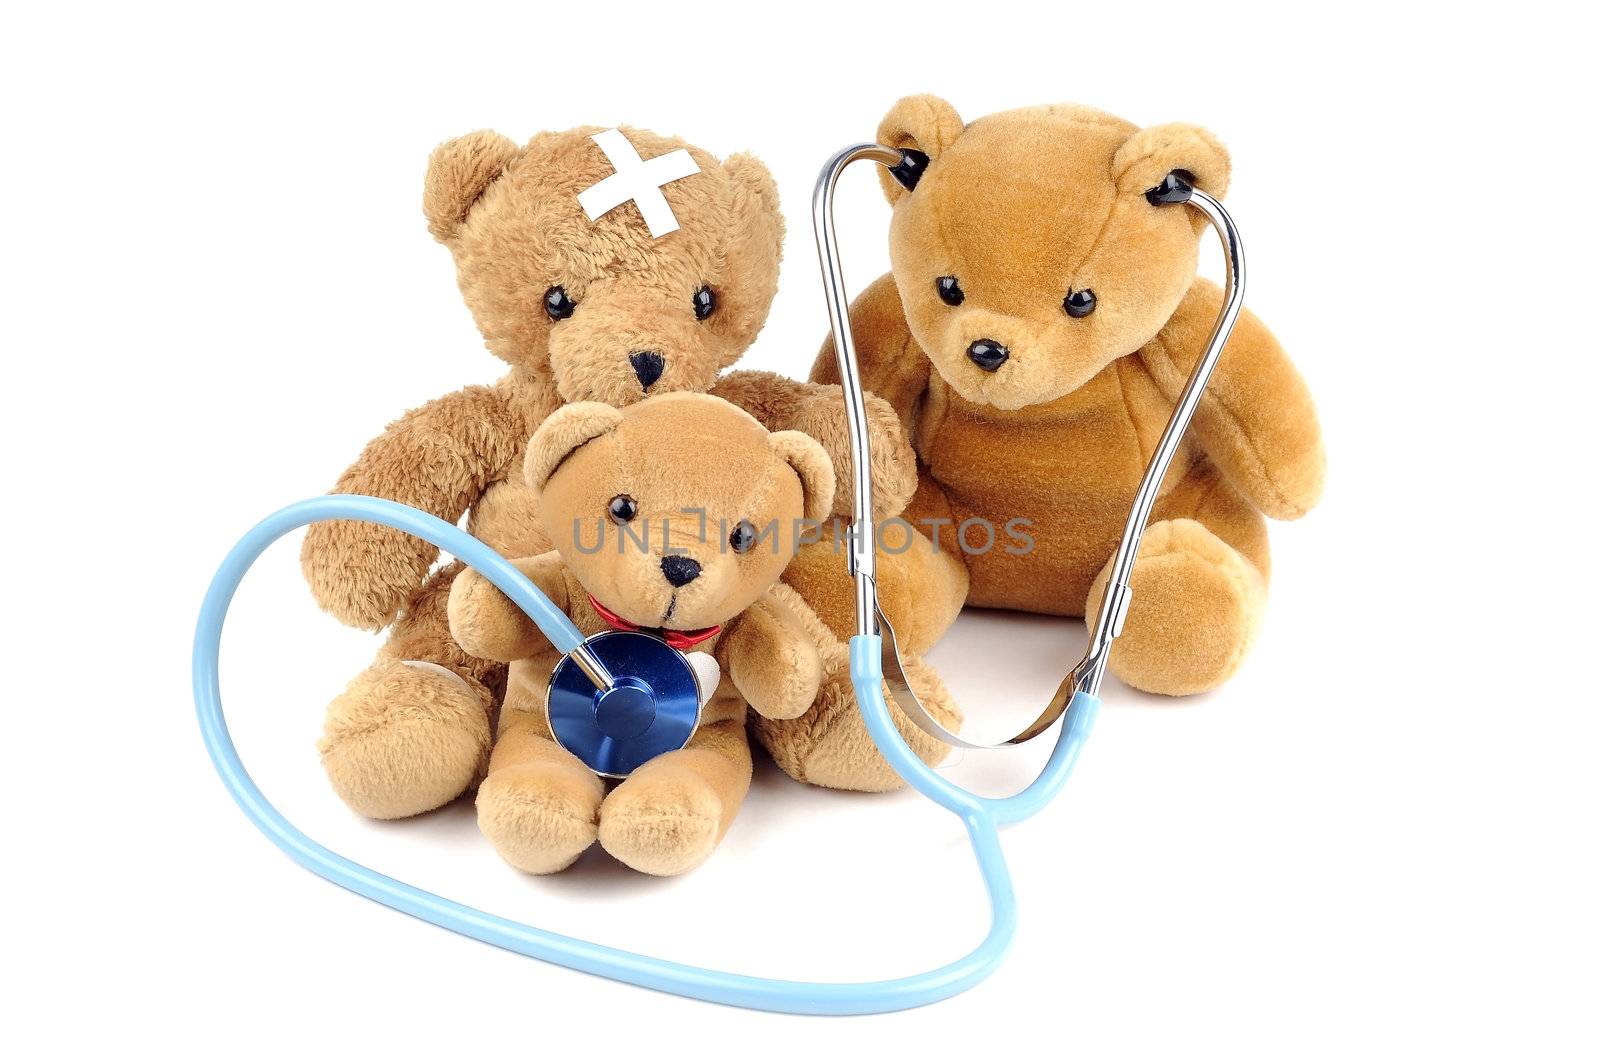 Three teddy bears and a stethoscope